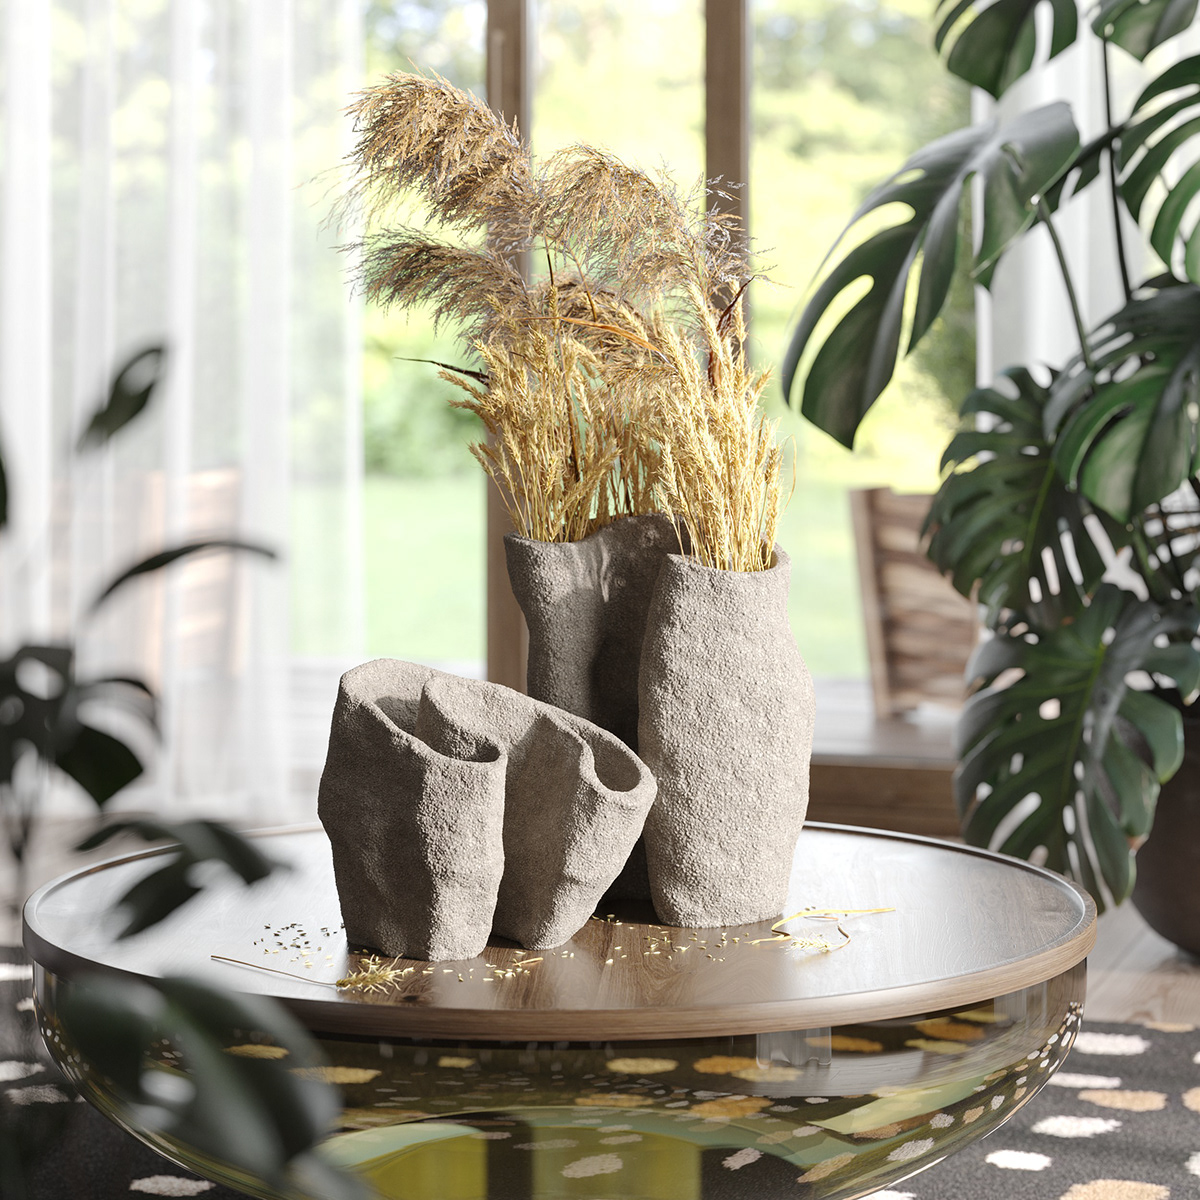 3D 3dmax CGI design furniture Interior product Render sofa visualisation